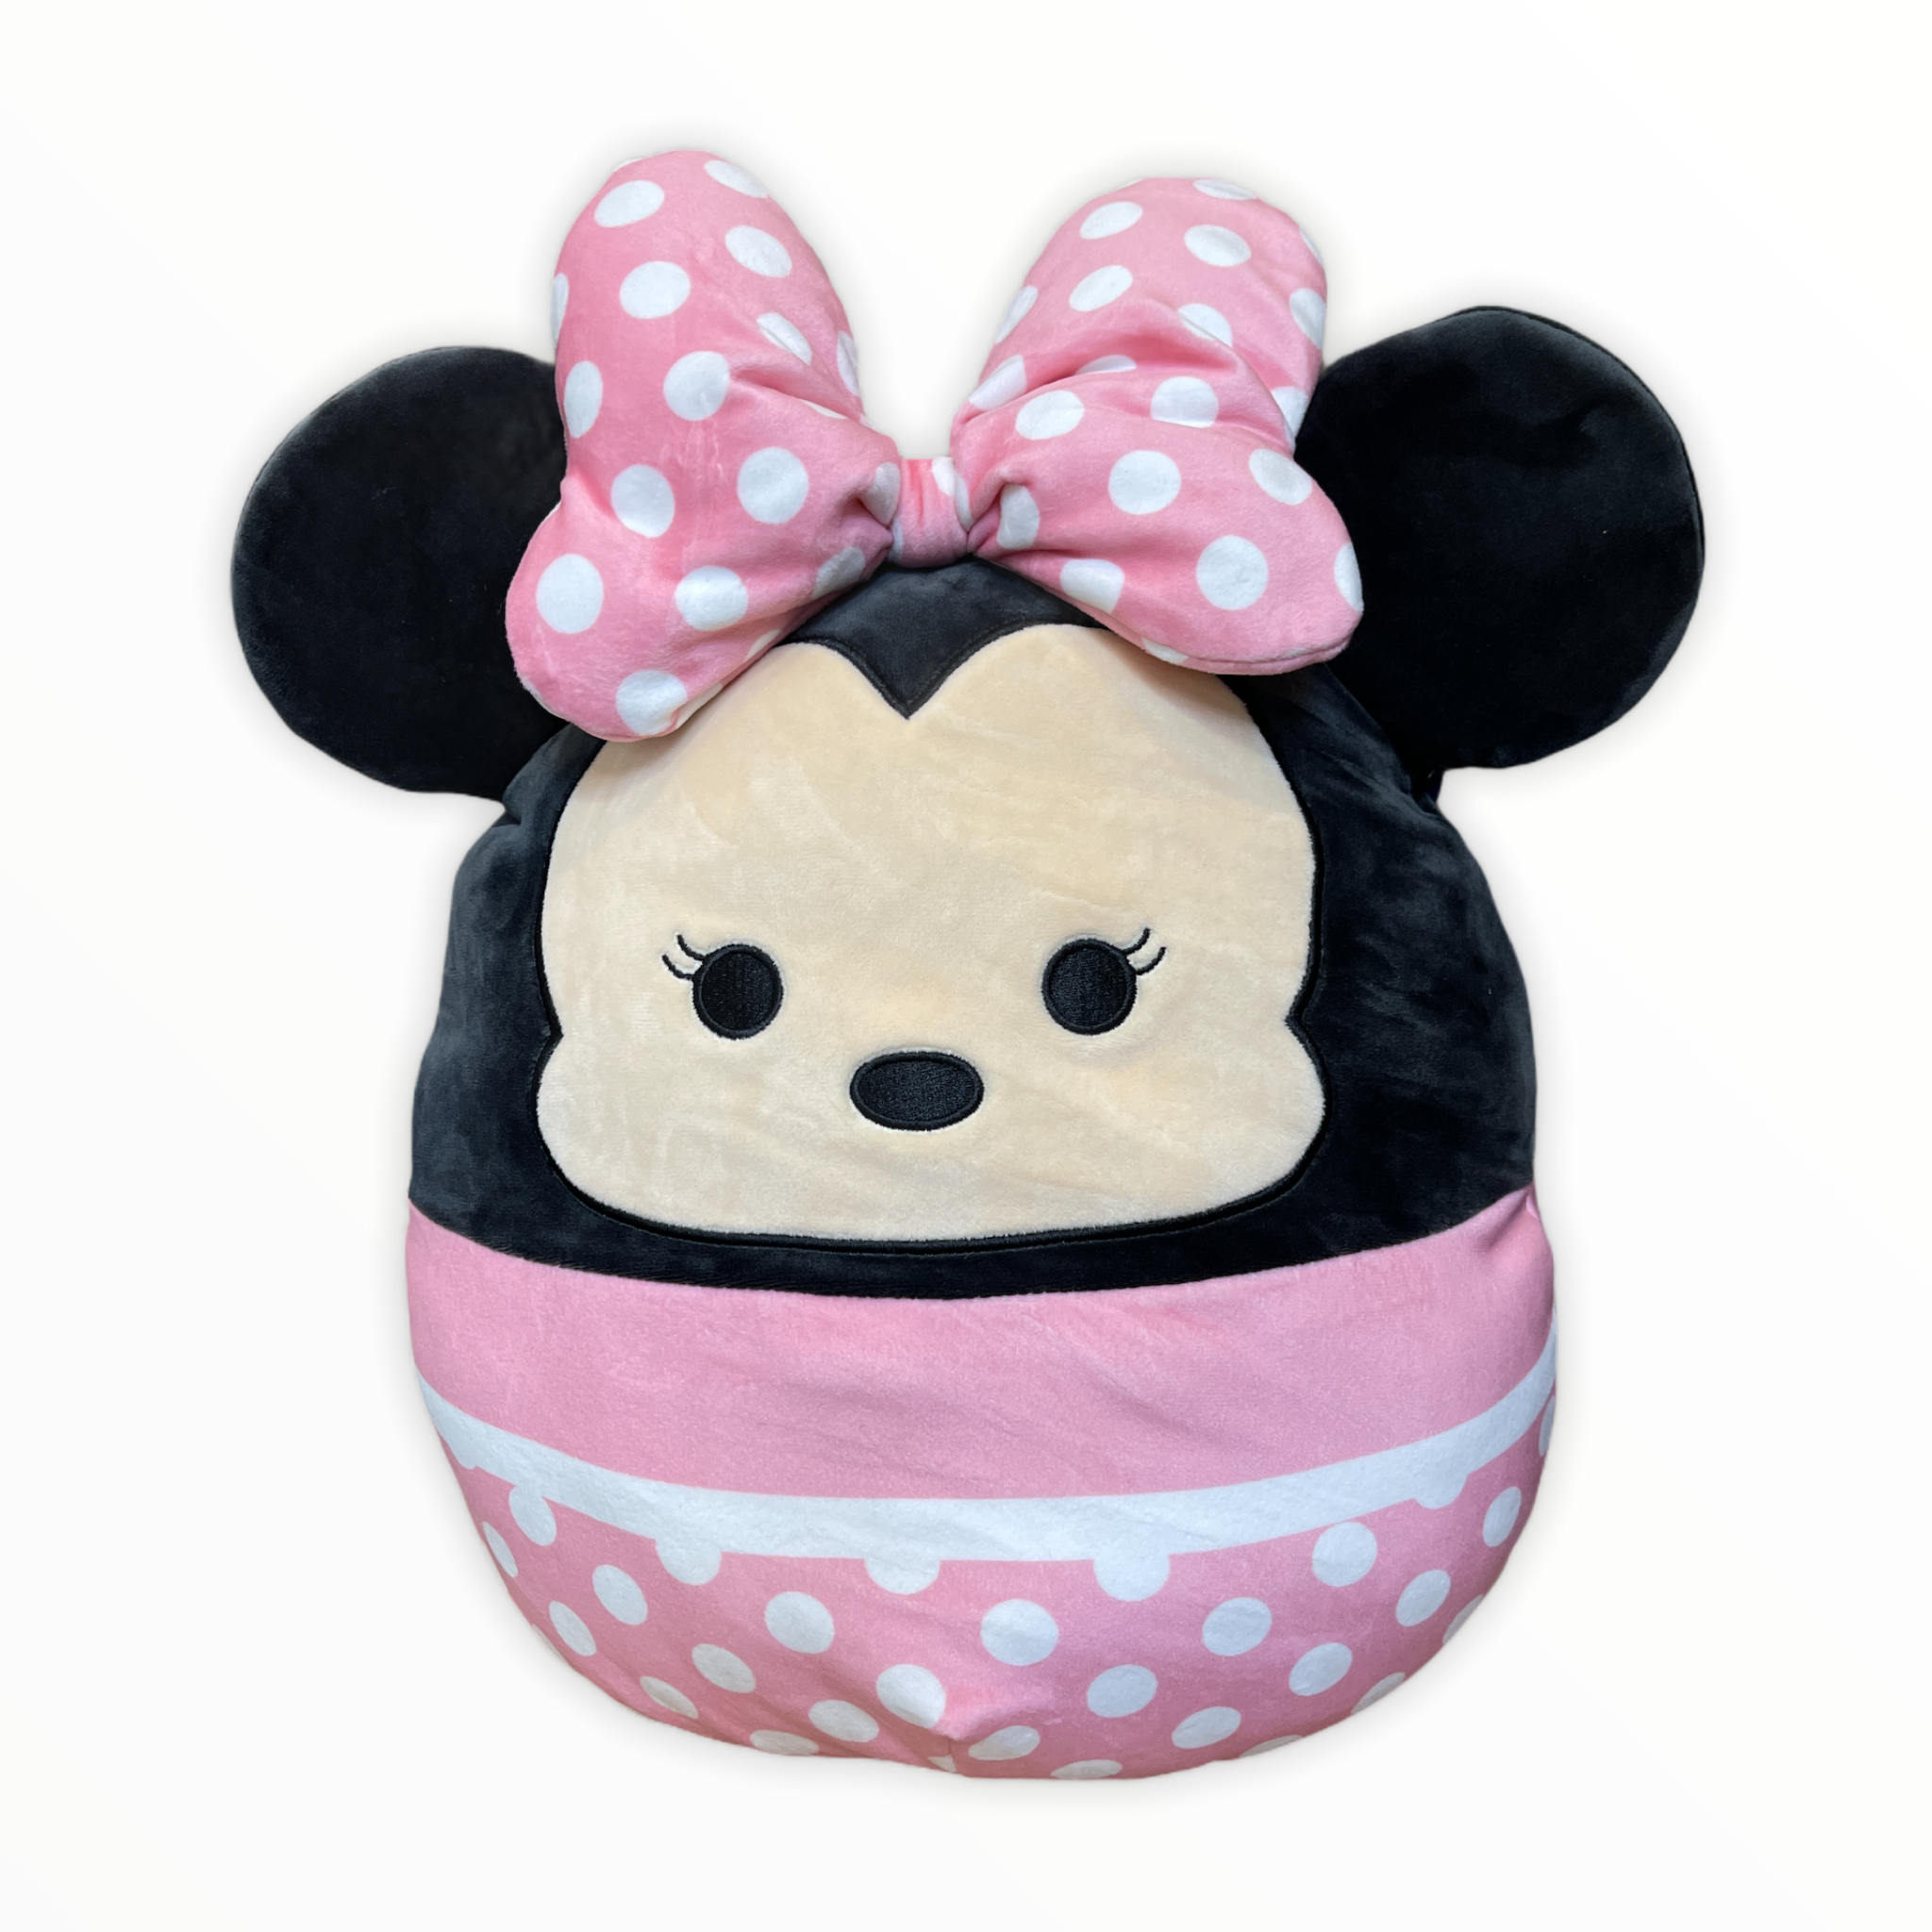 Squishmallow Minnie Mouse 12" Plush